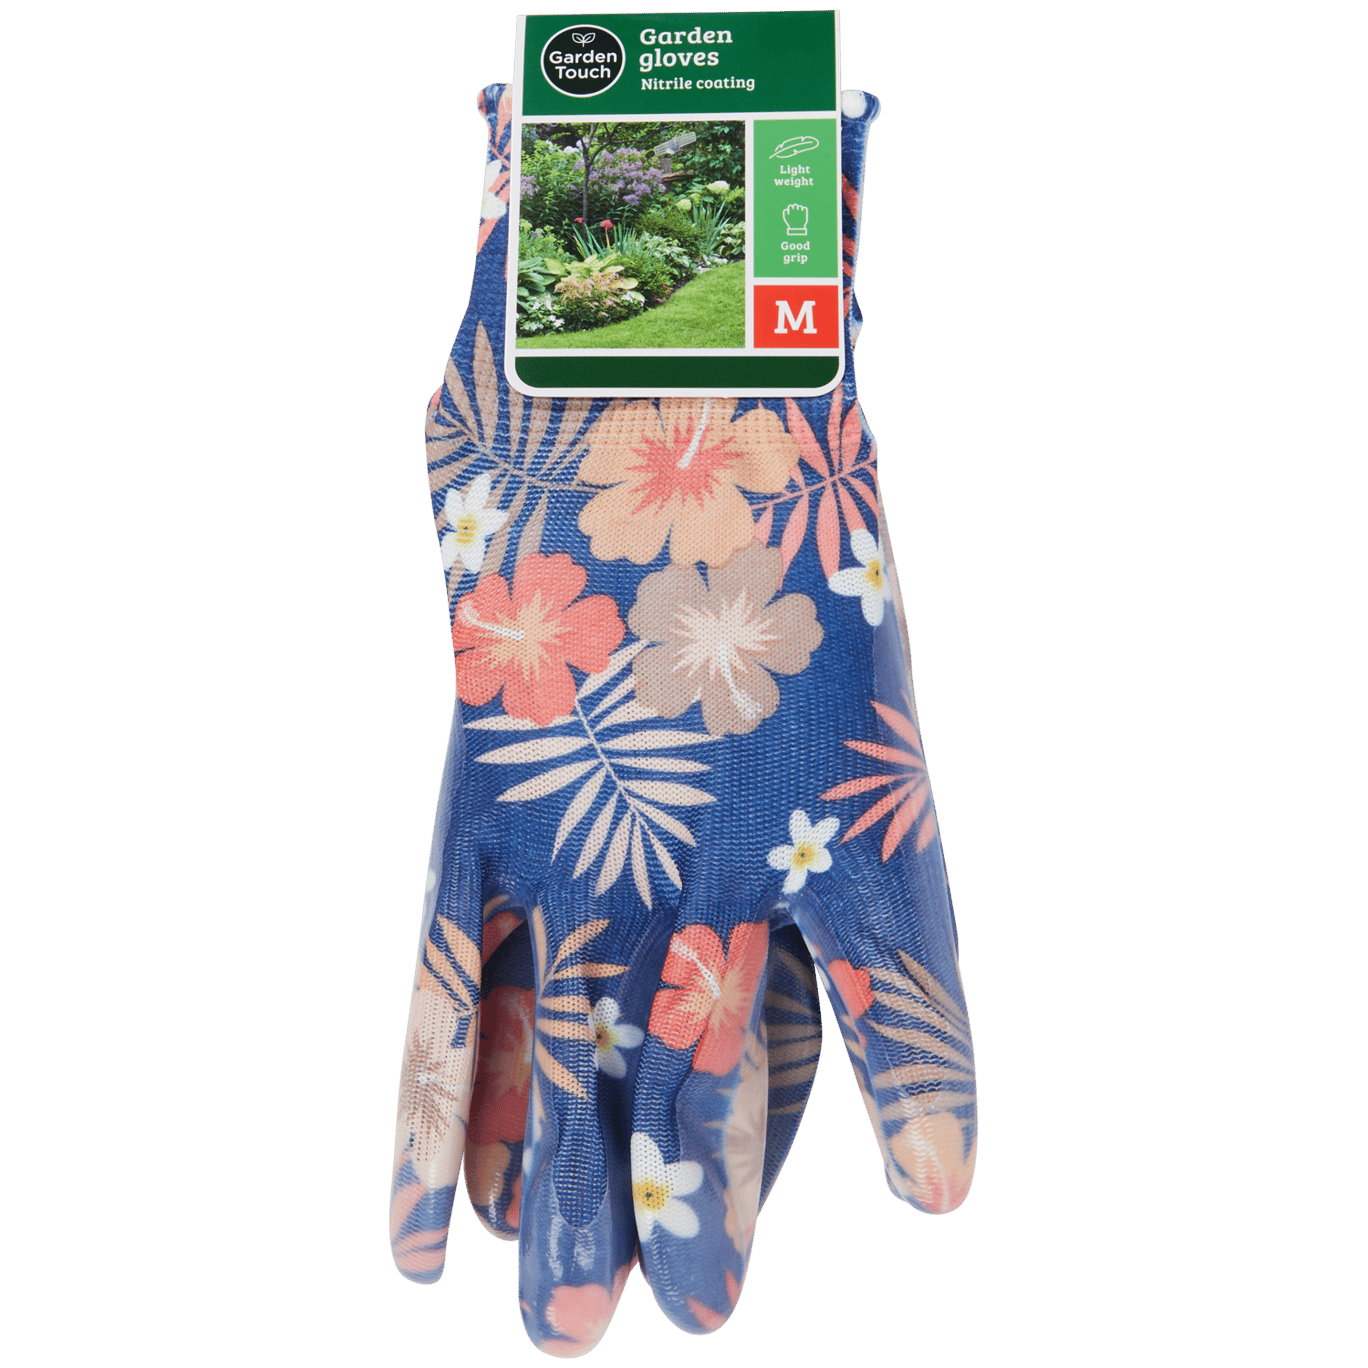 Gants de jardinage Garden Respirables femme - Taille 8 (M)